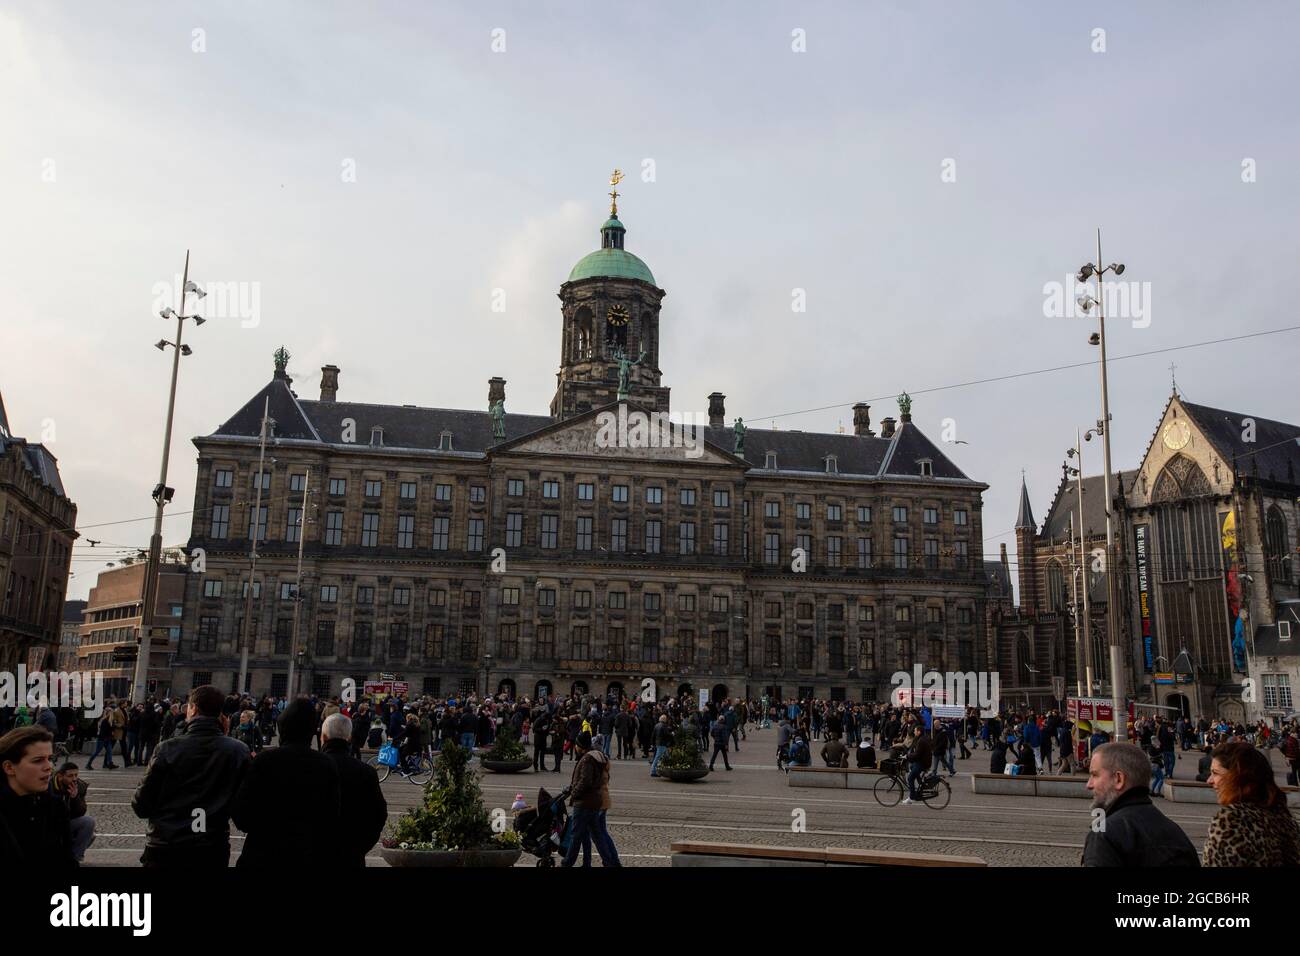 Royal Palace on Dam Square, Centrum, Amsterdam, Netherlands. Stock Photo